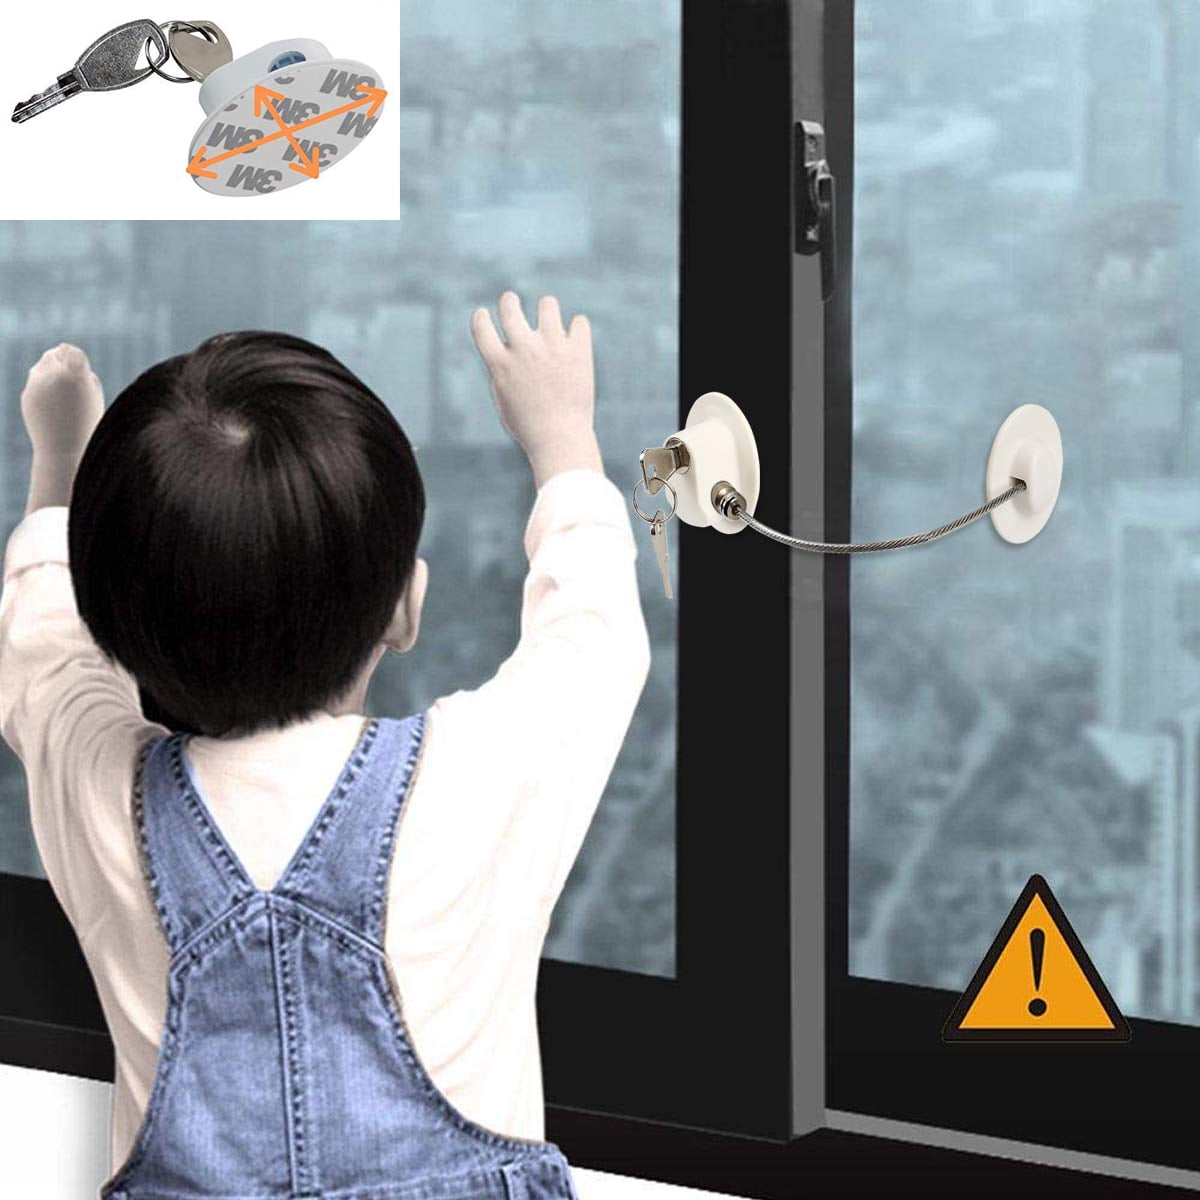  YEYA Upgraded Child Safety Lock, Refrigerator Lock for Kids,  Mini Fridge Lock with Key : Baby